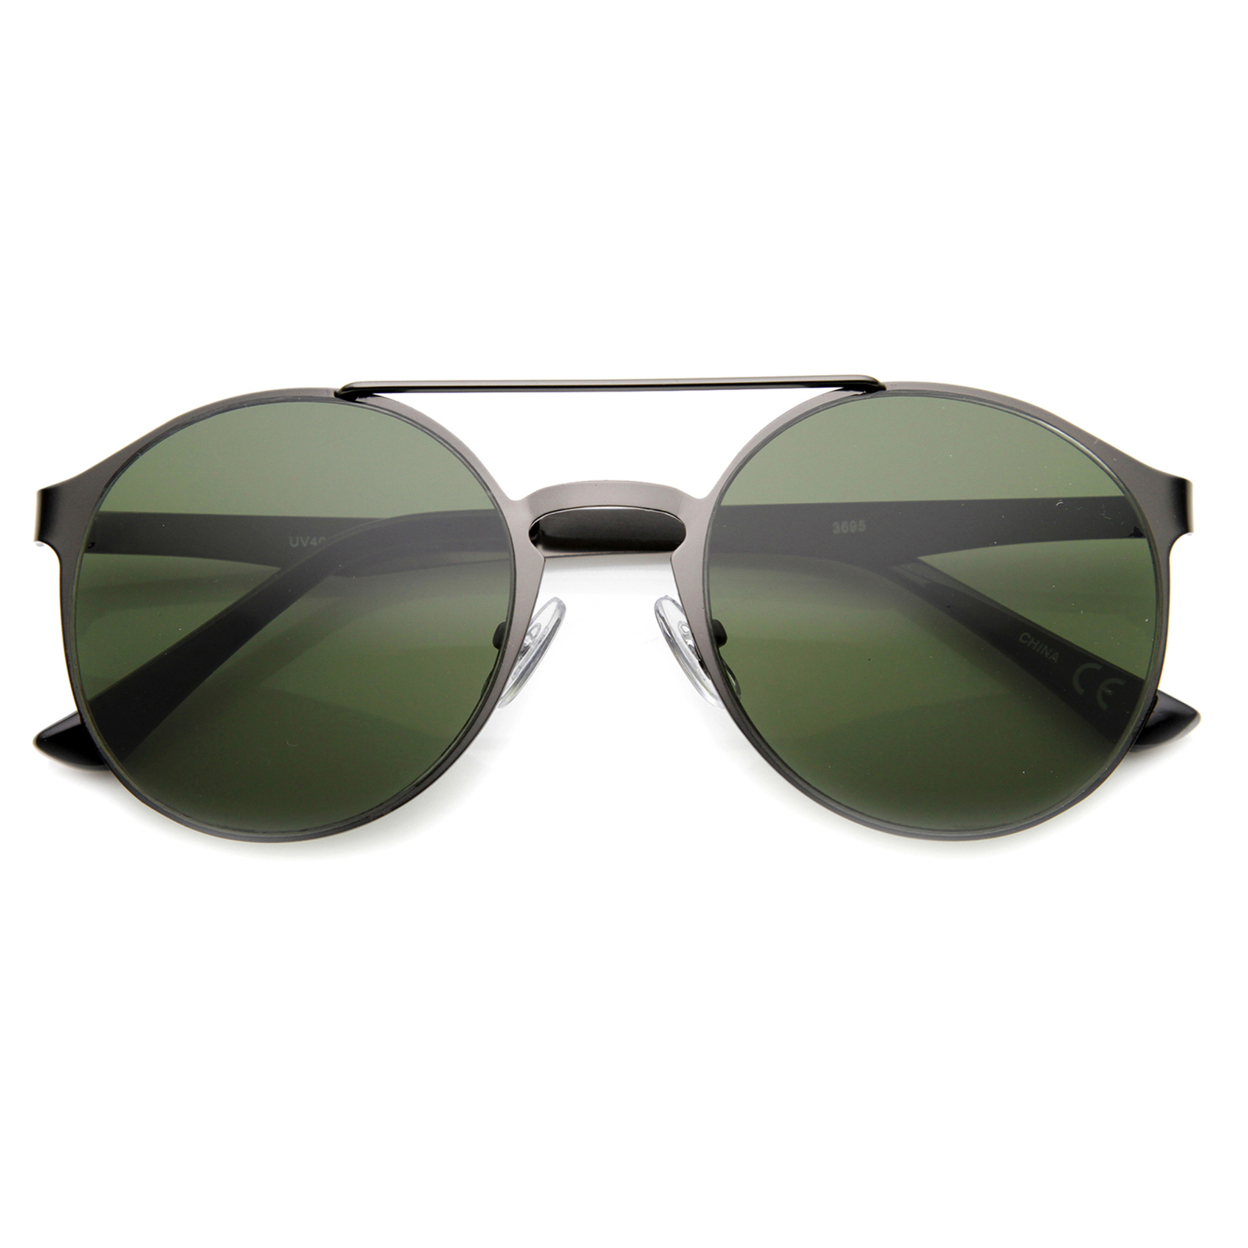 Mens Aviator Sunglasses With UV400 Protected Composite Lens 9818 - Black / Lavender